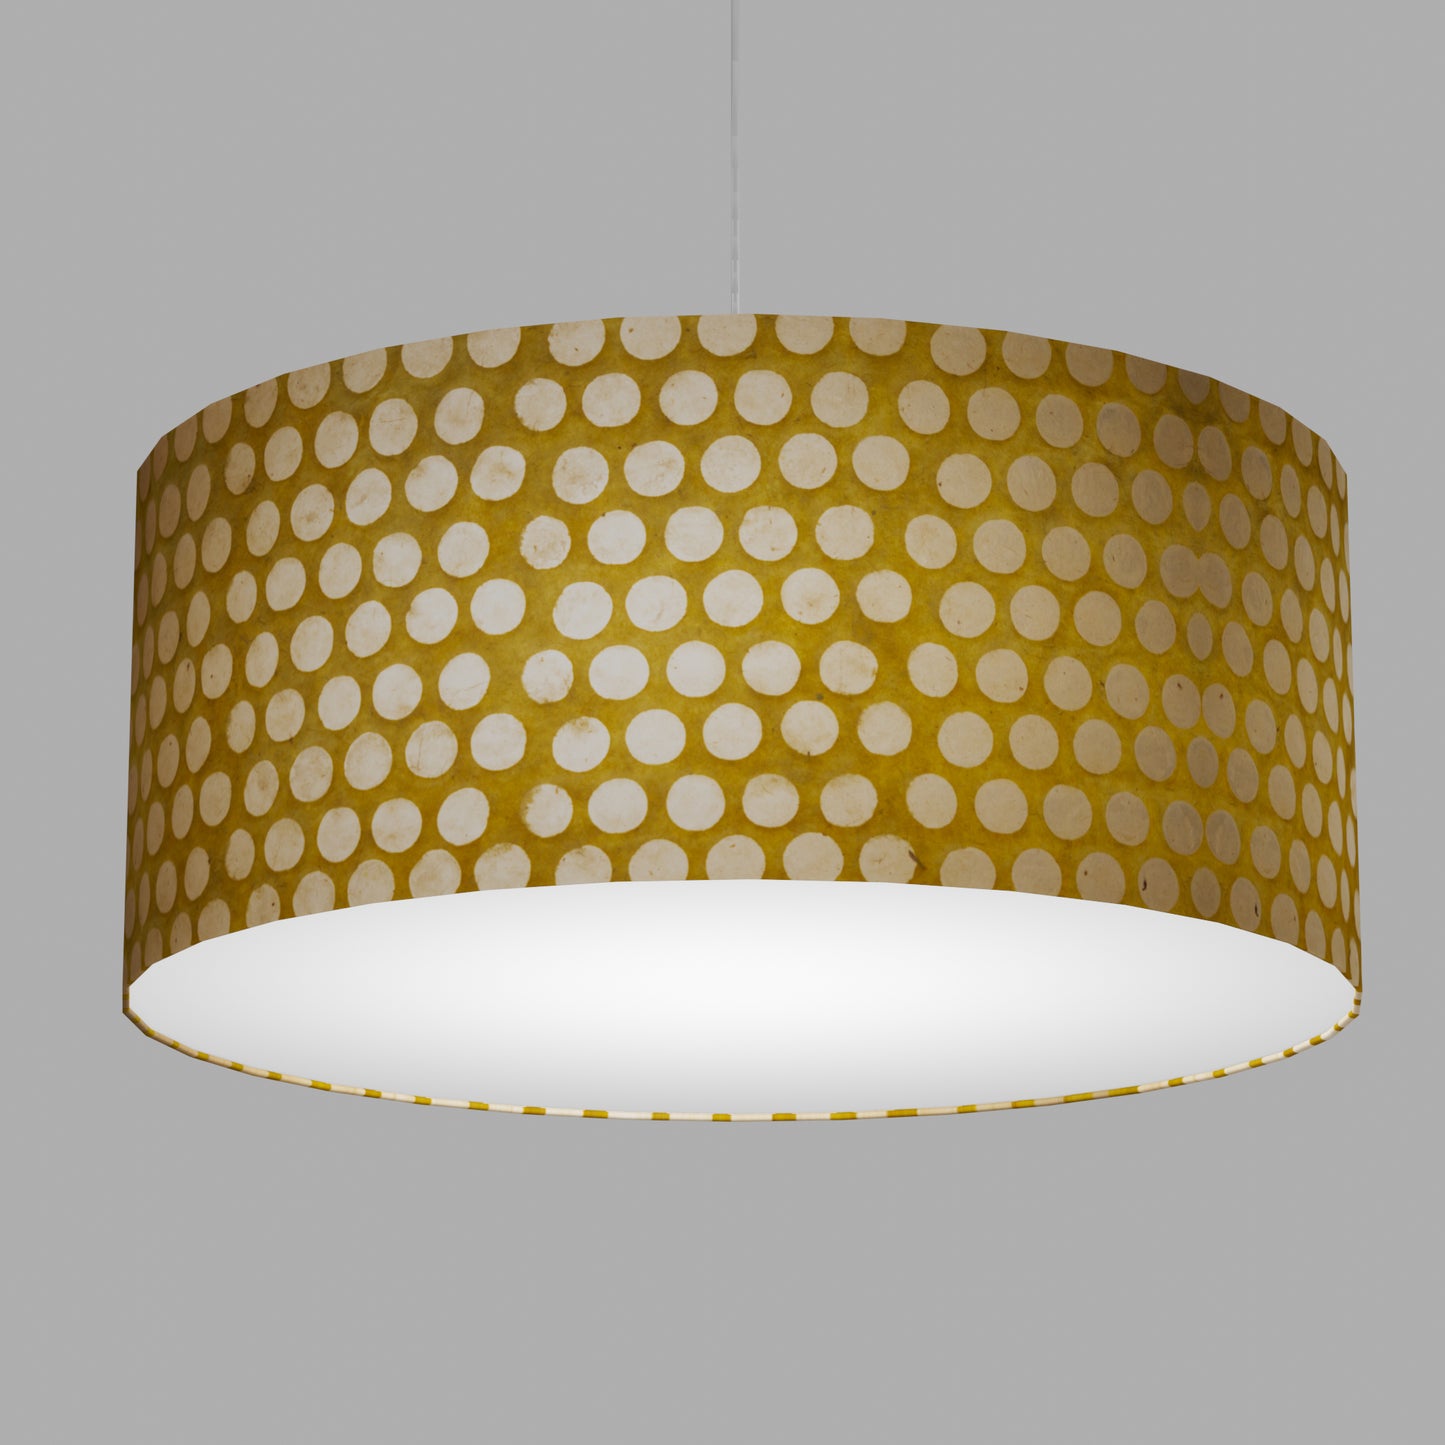 Drum Lamp Shade - P86 ~ Batik Dots on Yellow, 70cm(d) x 30cm(h)